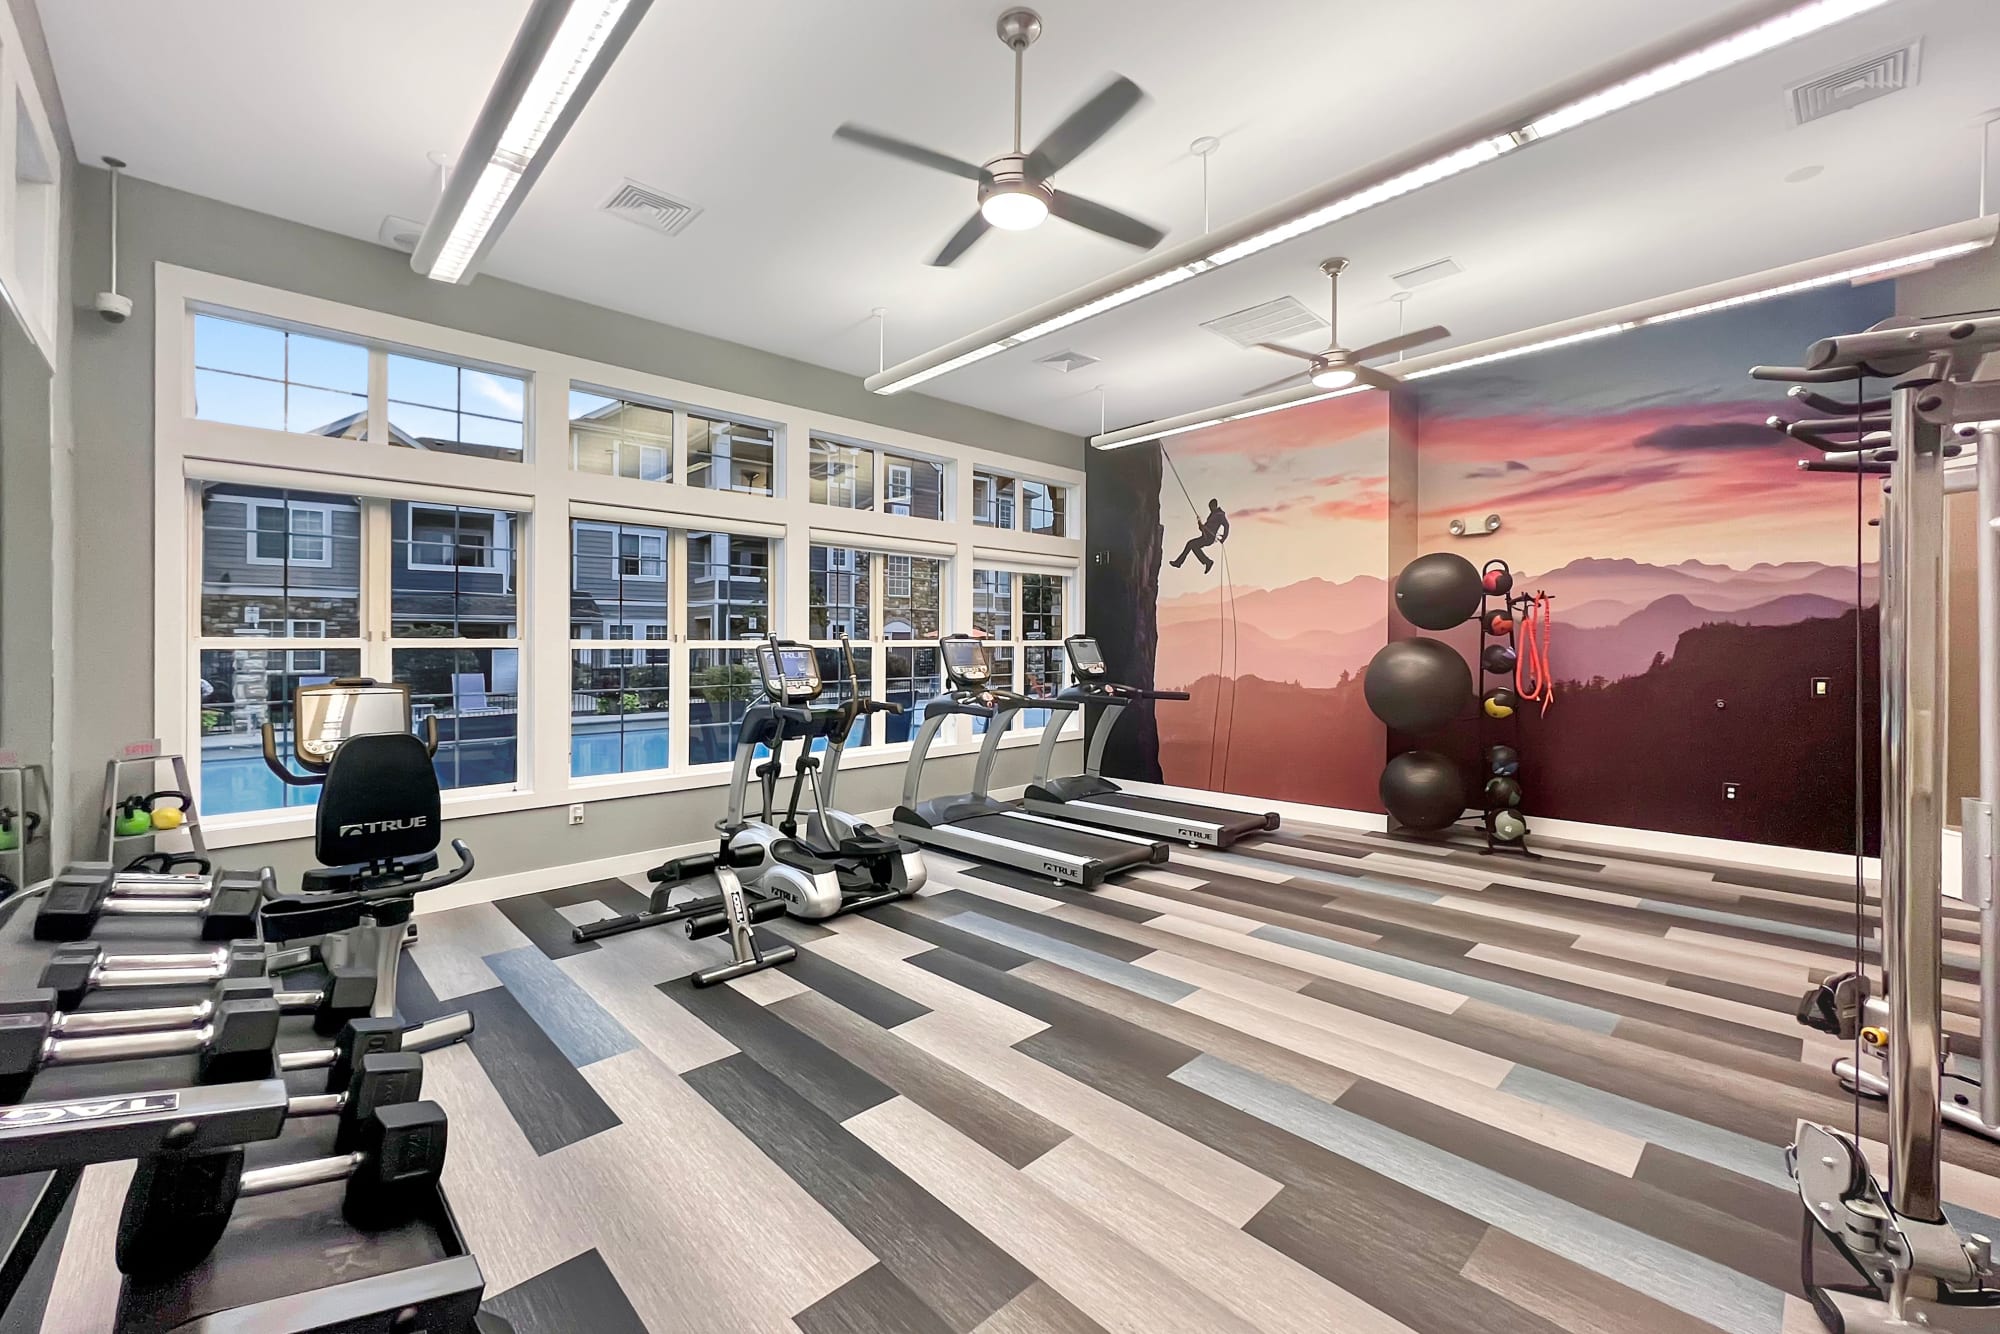 The community fitness center at Crestone Apartments in Aurora, Colorado